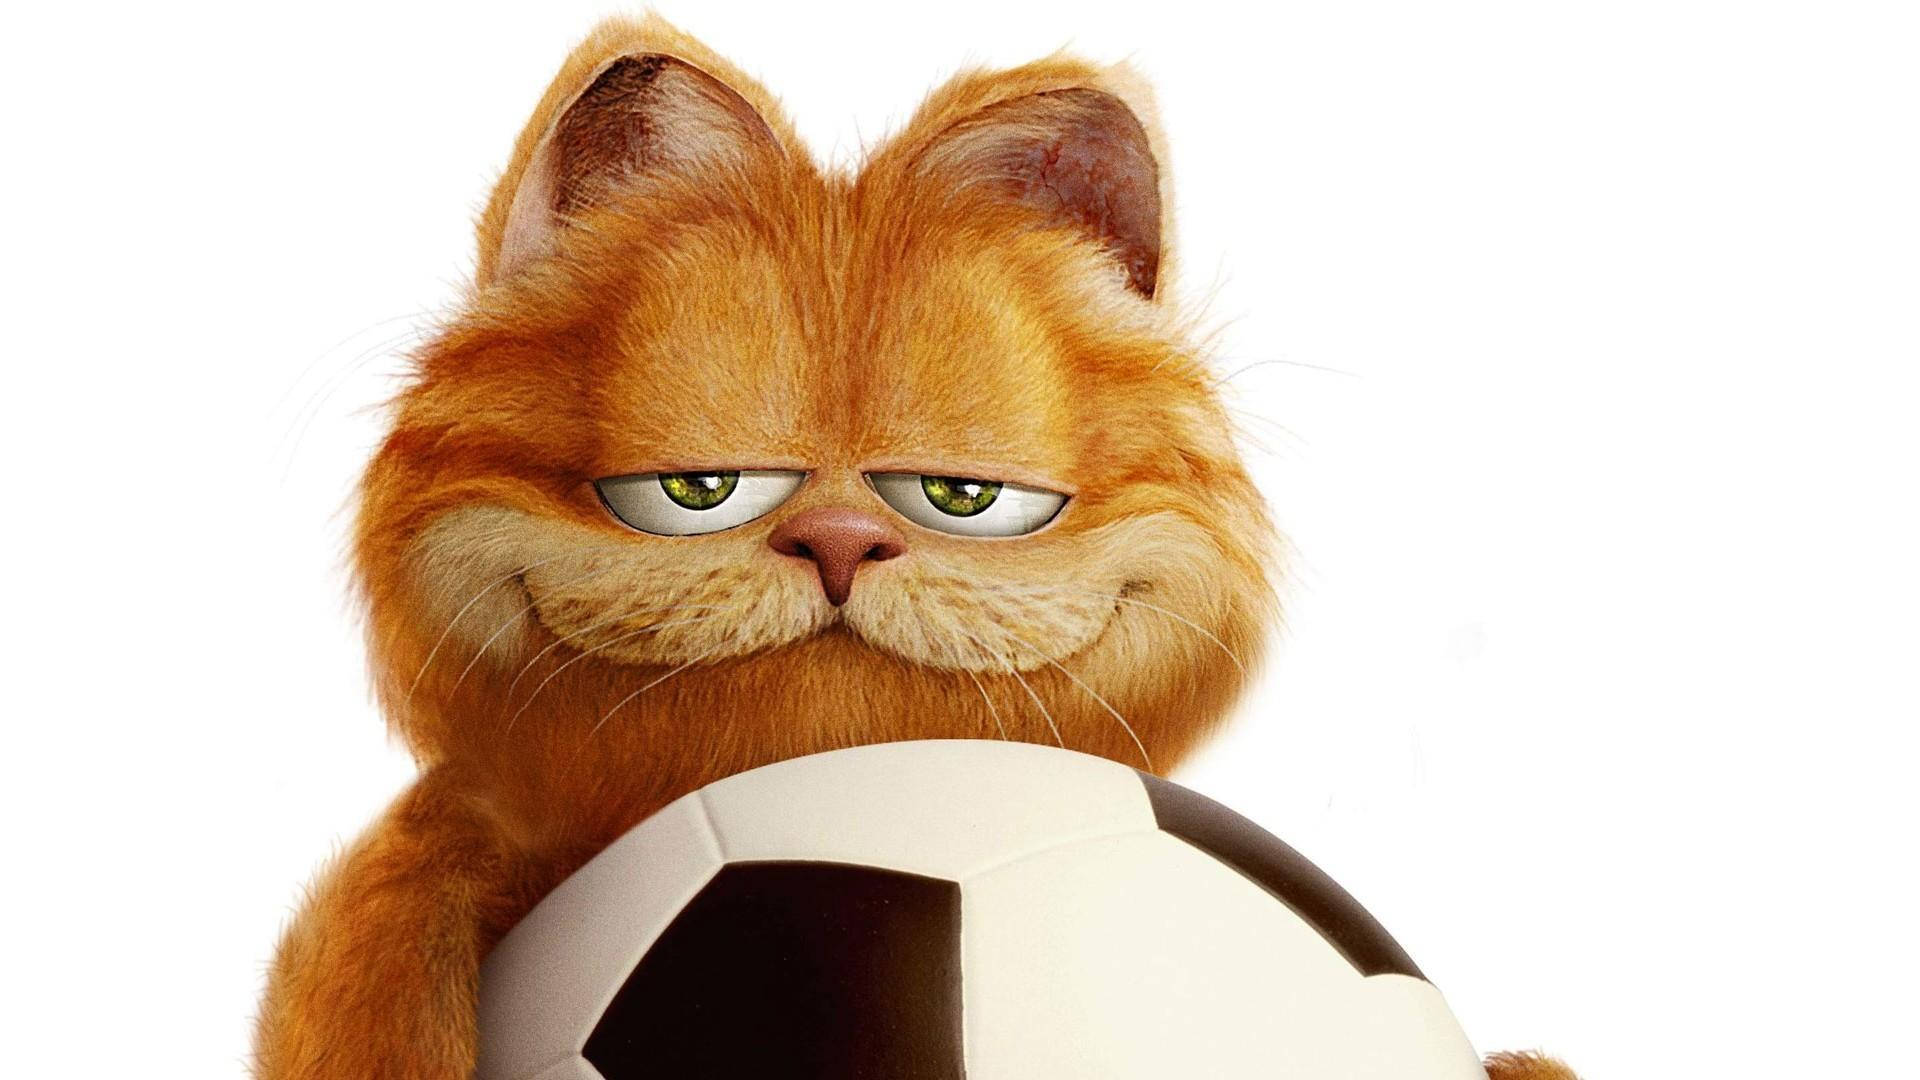 Caption: Garfield The Cat Enjoys Playing Football